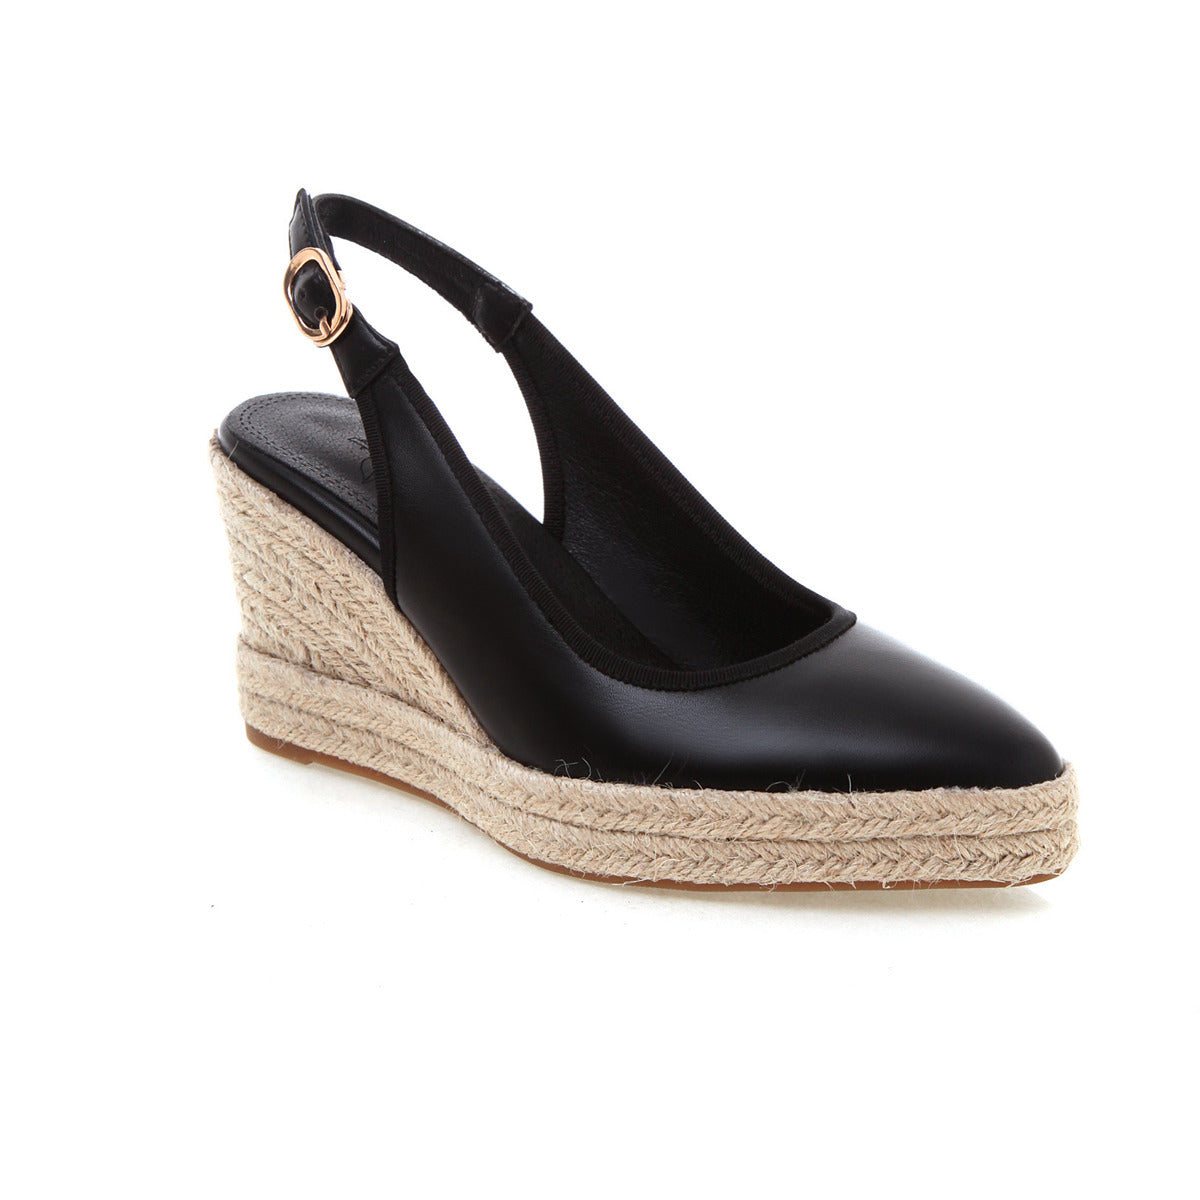 Women's Pointed Toe Slingbacks Platform Wedge Sandals